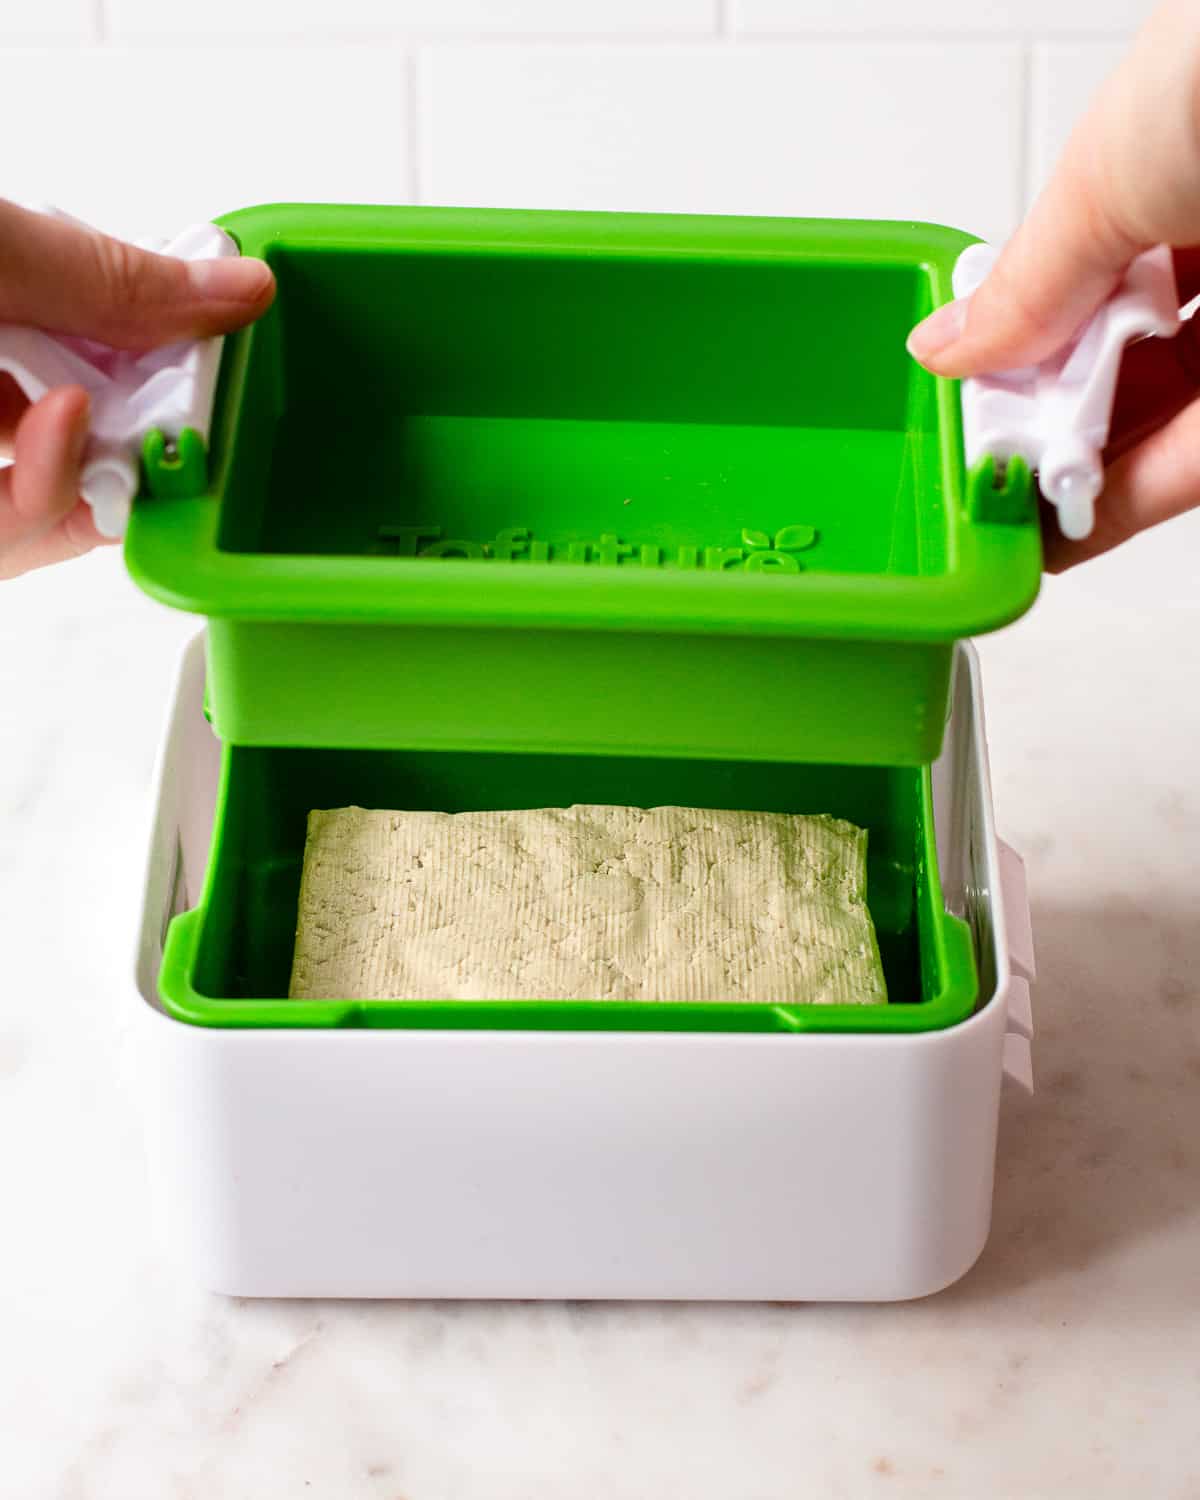 Hand closing a white and green plastic tofu press.